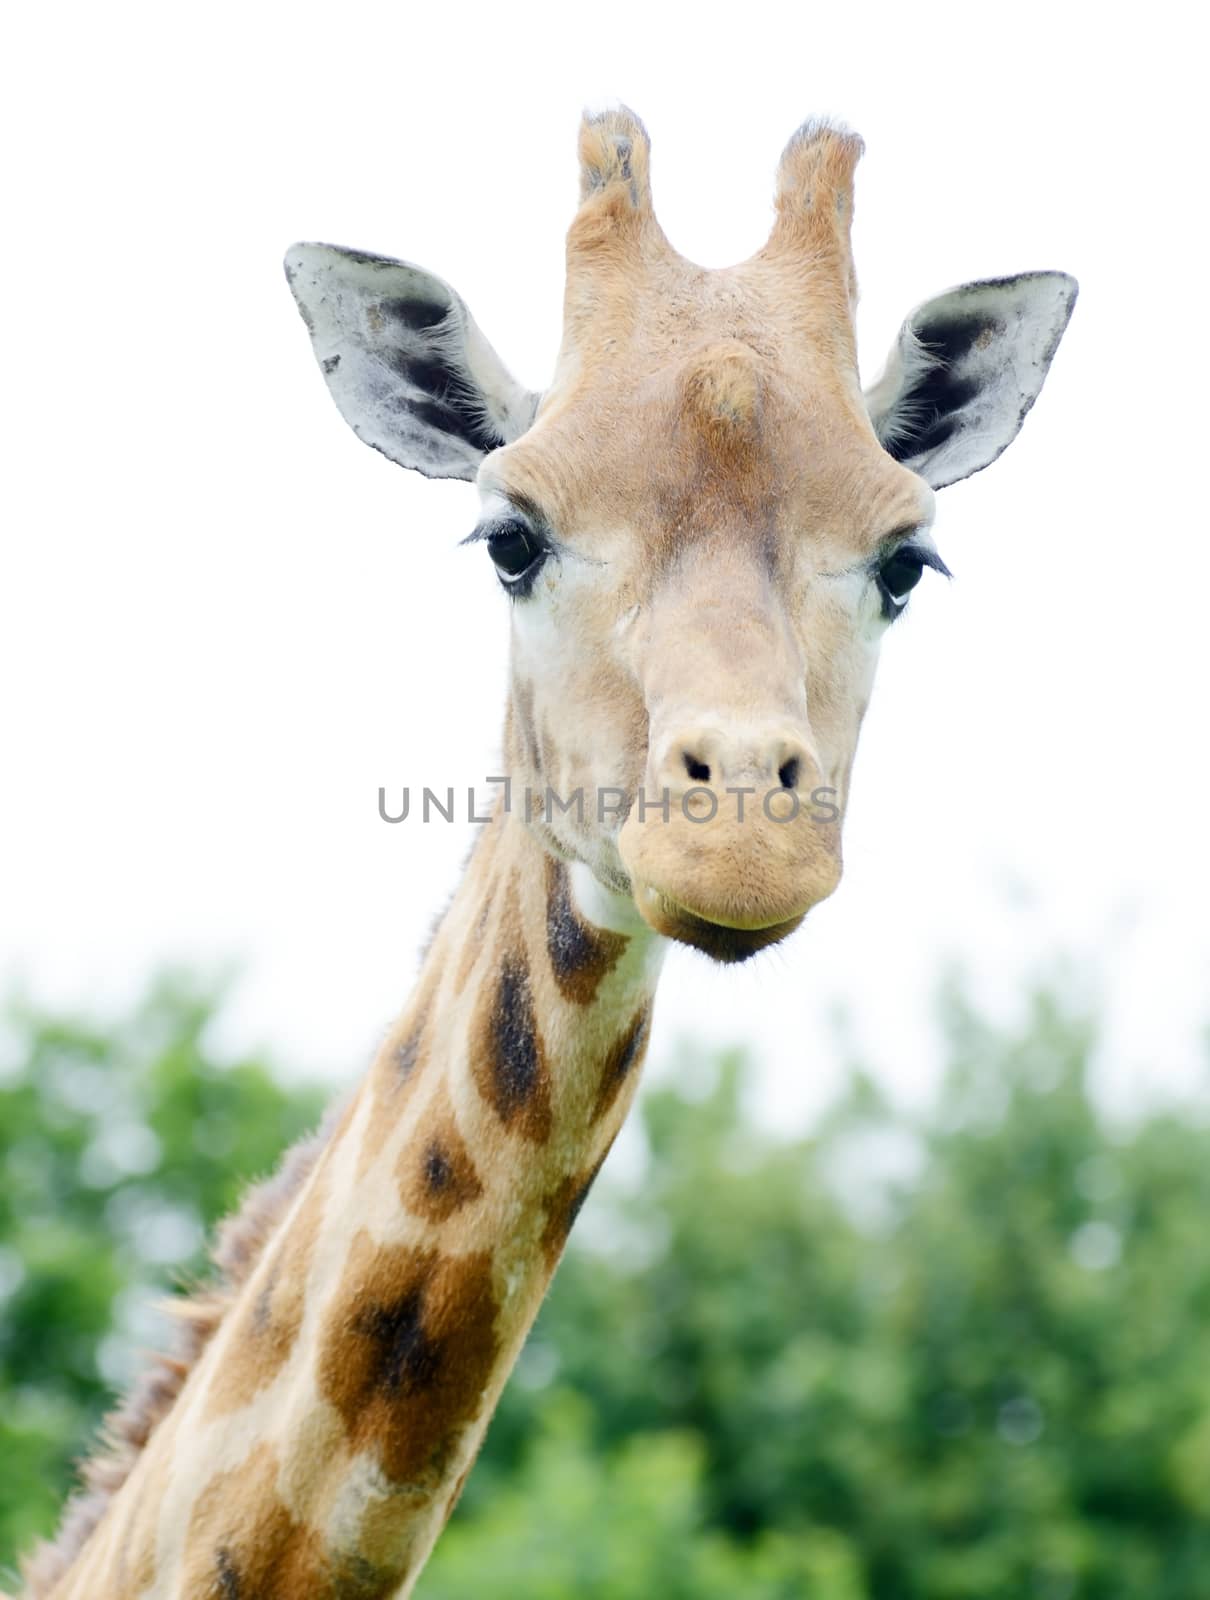 Giraffe closeup by kmwphotography